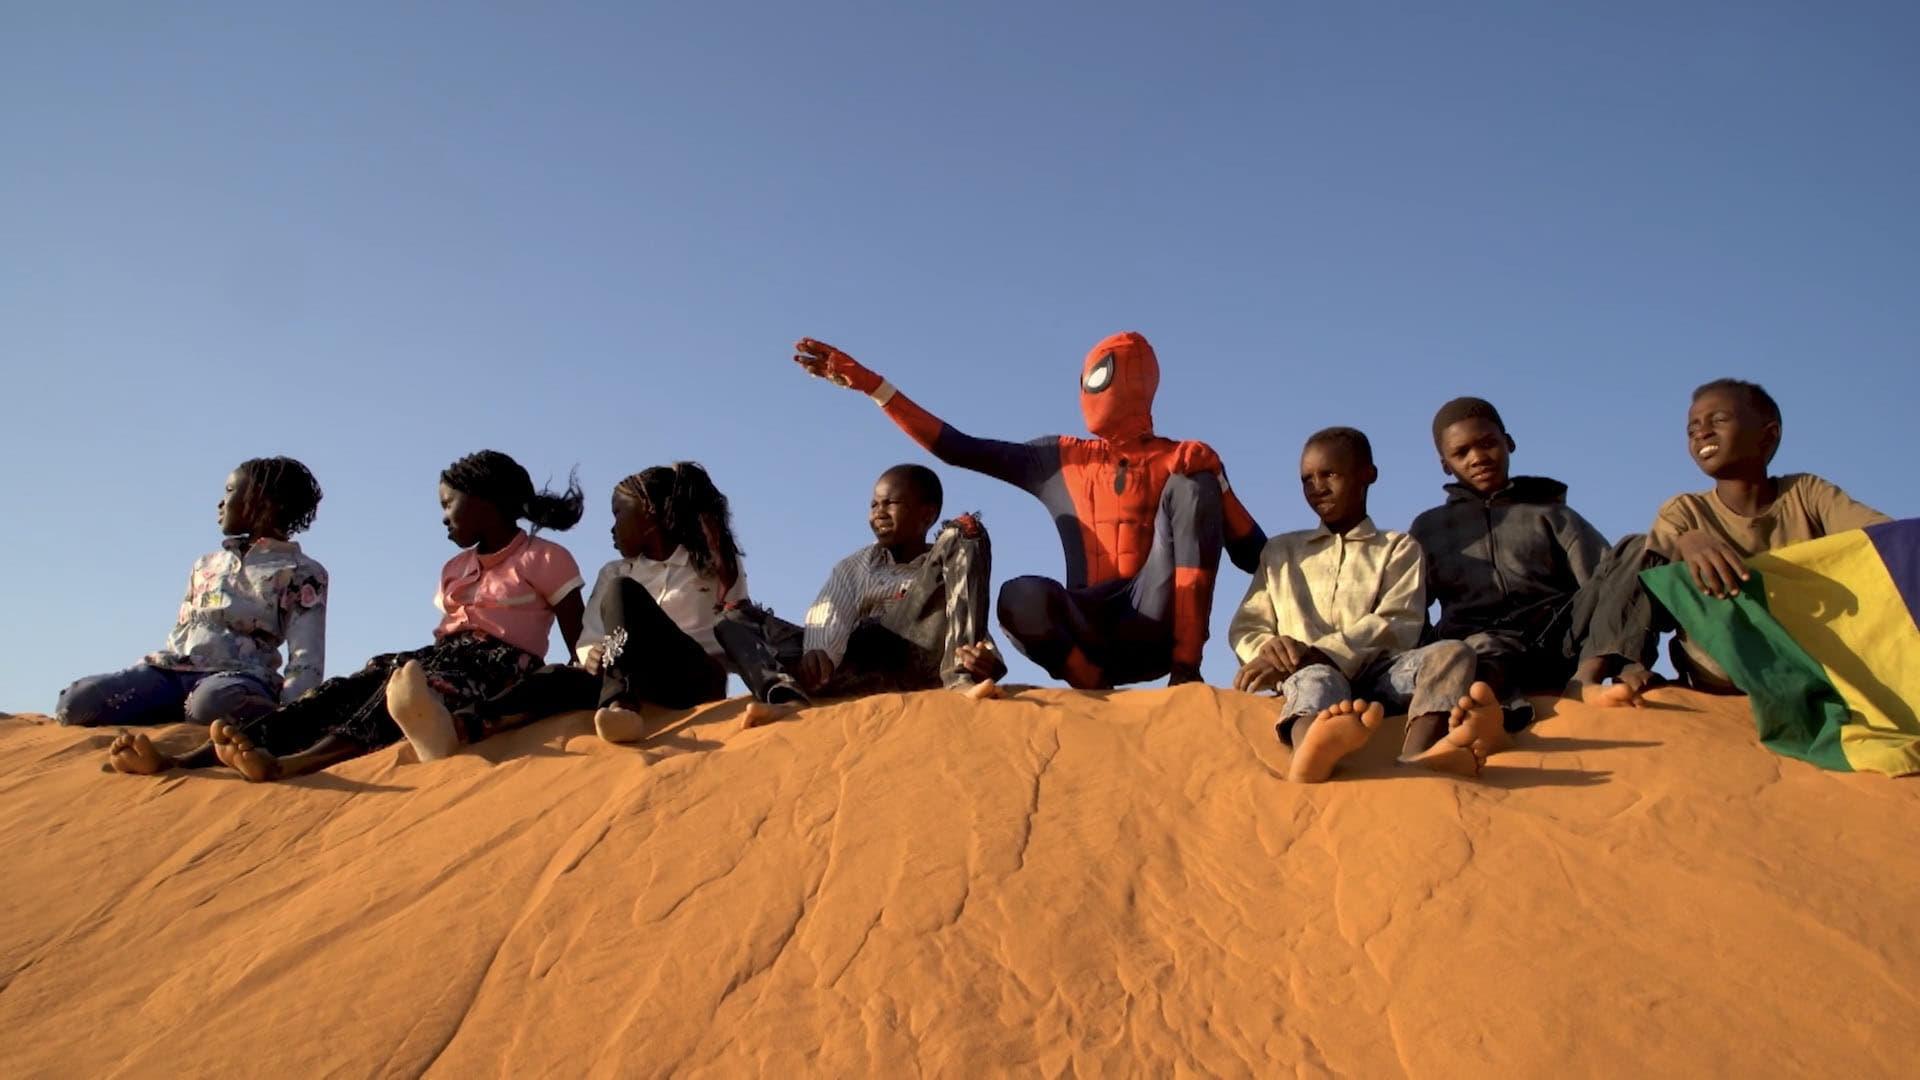 The Spider-Man of Sudan